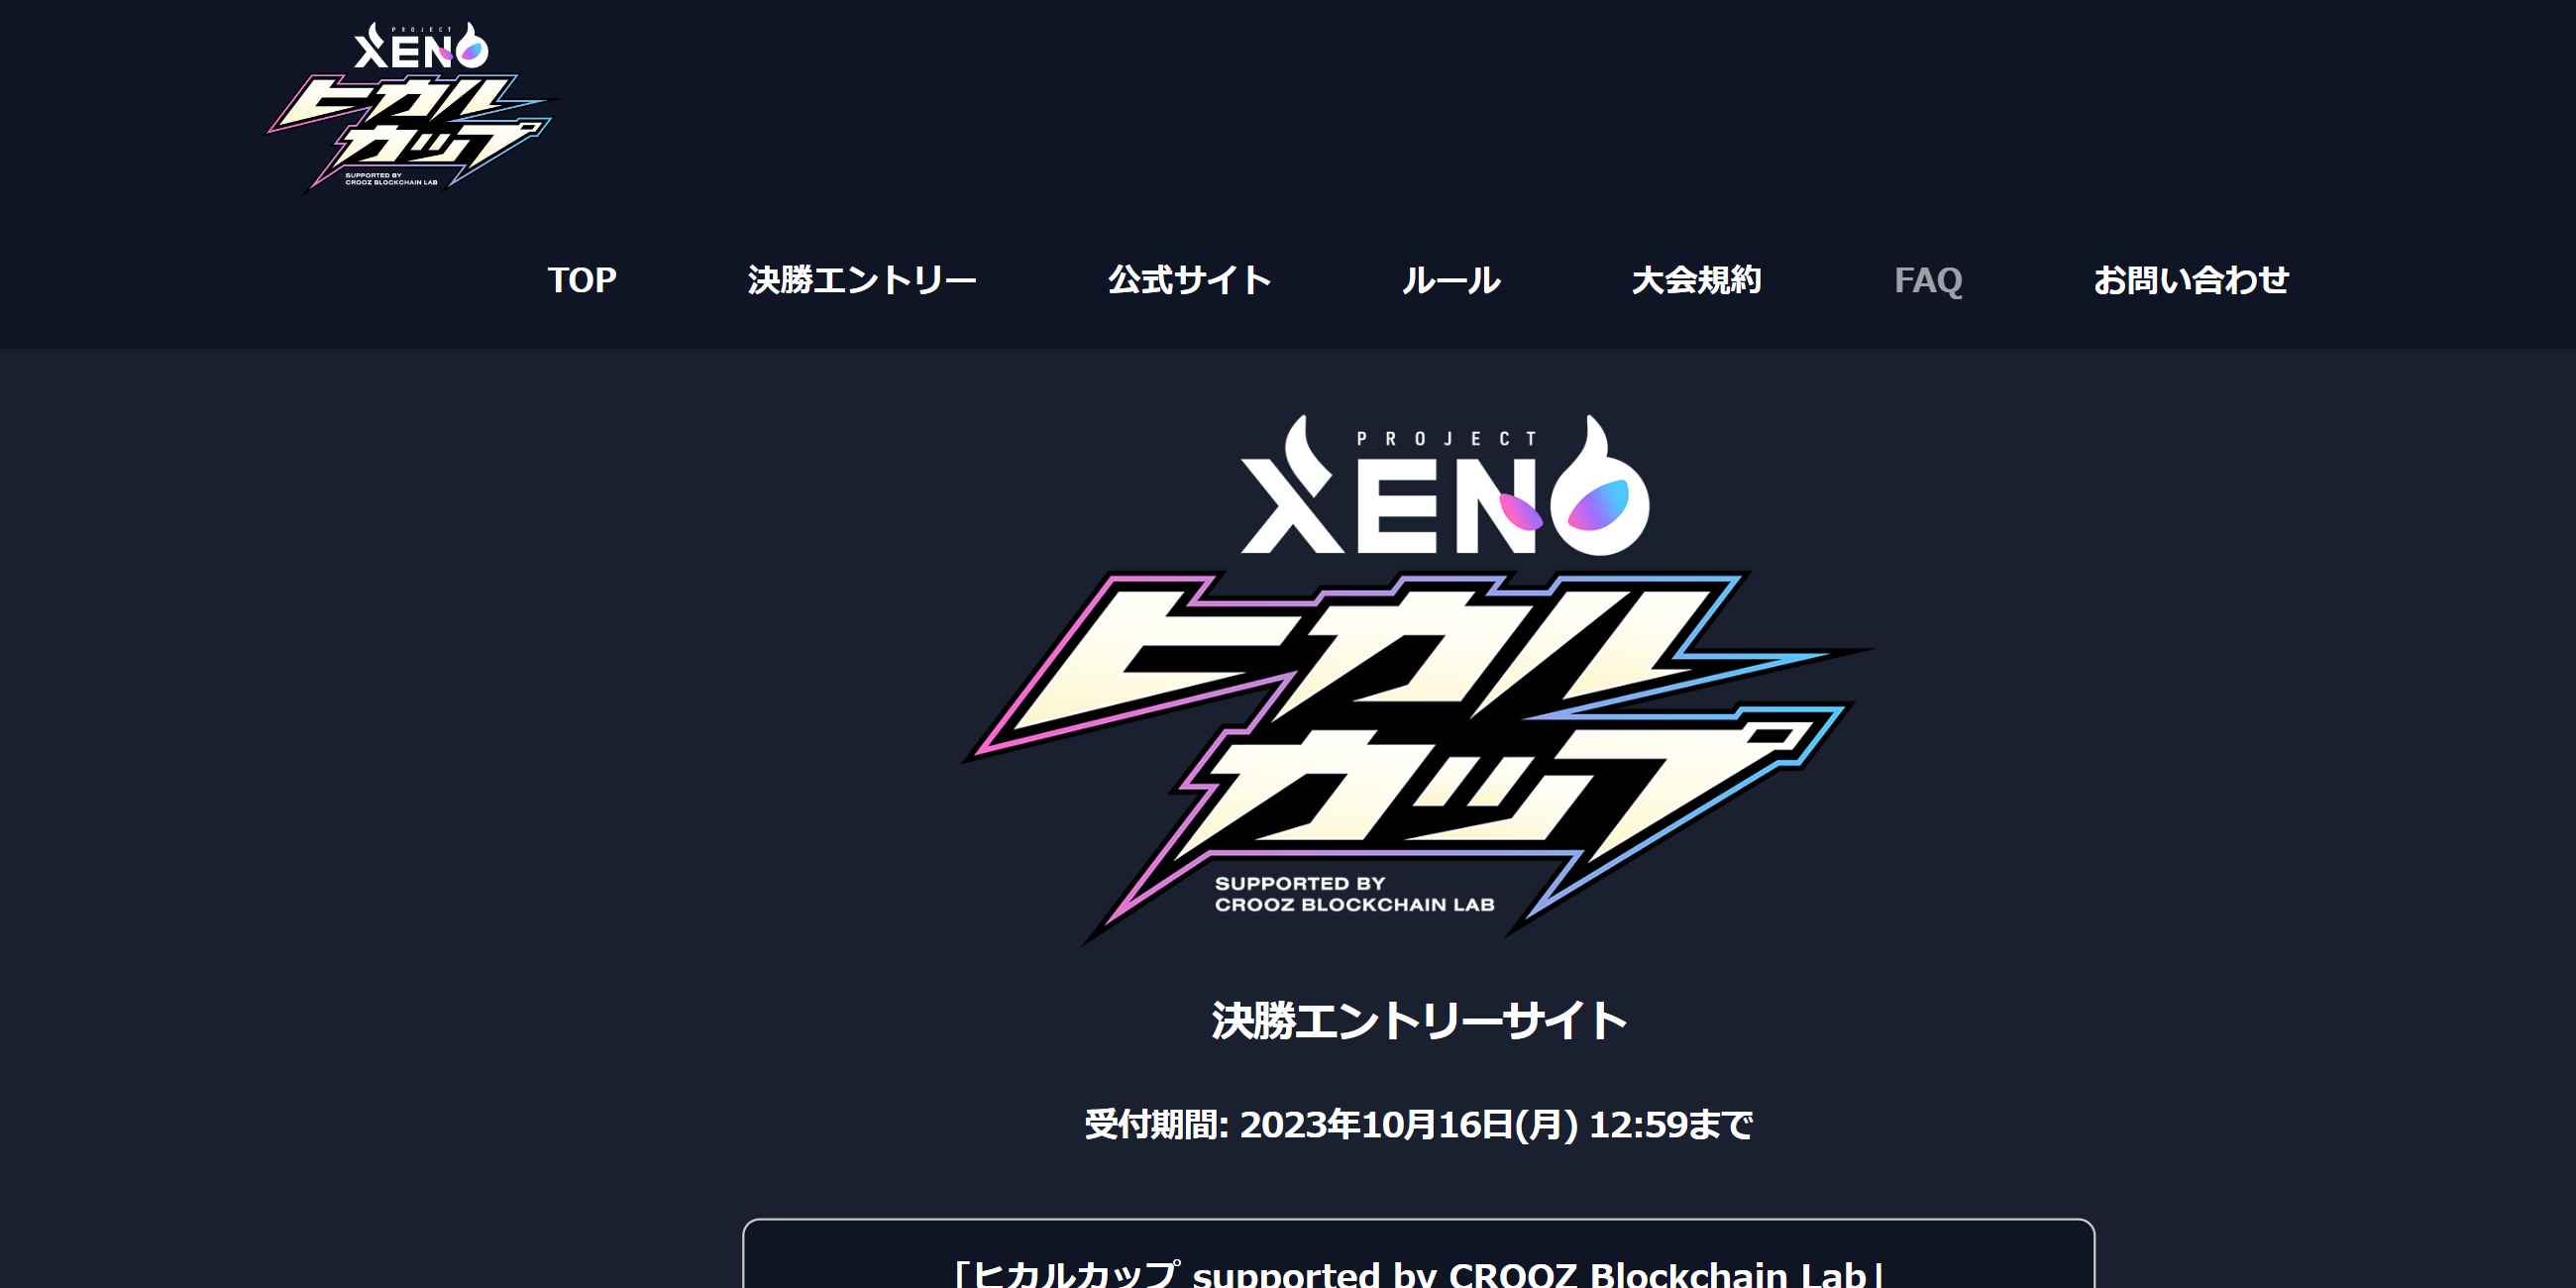 PROJECT XENO エントリーサイト